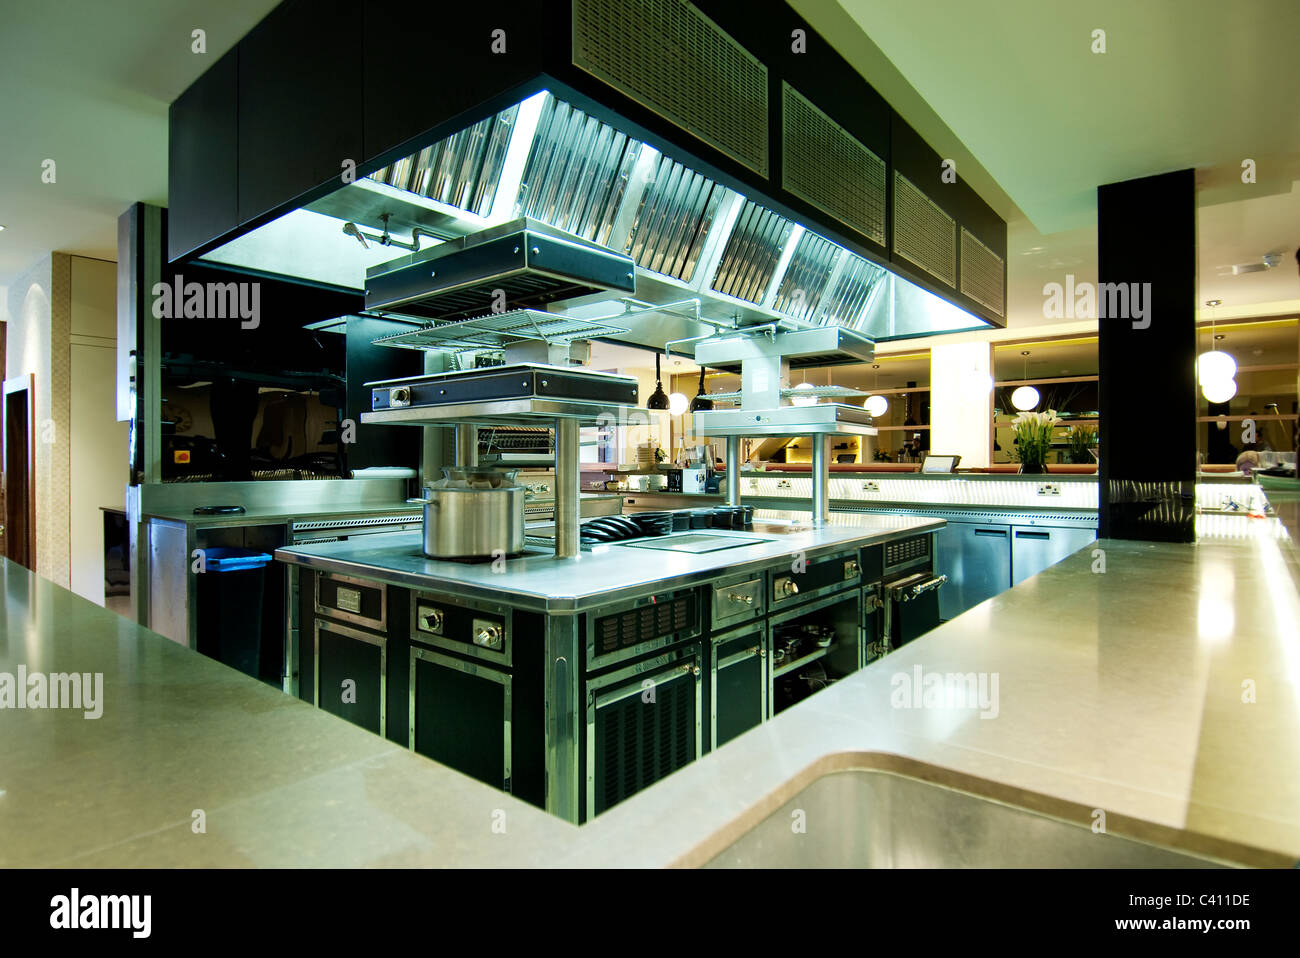 Commercial restaurant kitchen Stock Photo